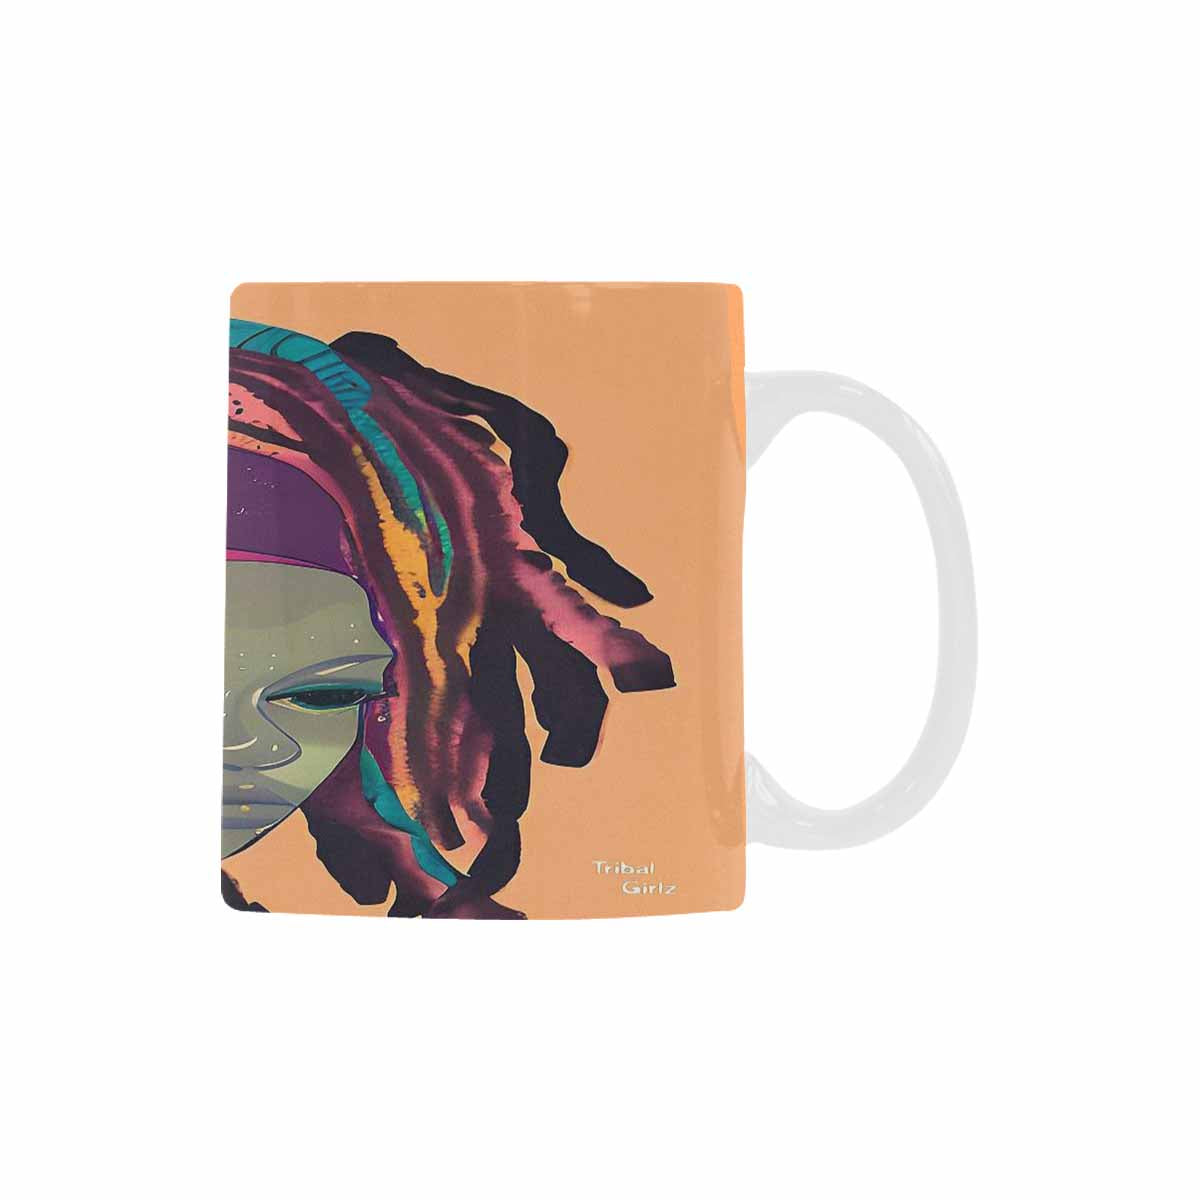 Dreads & Braids, coffee mug, african tribalgirlz Fulangiara 9